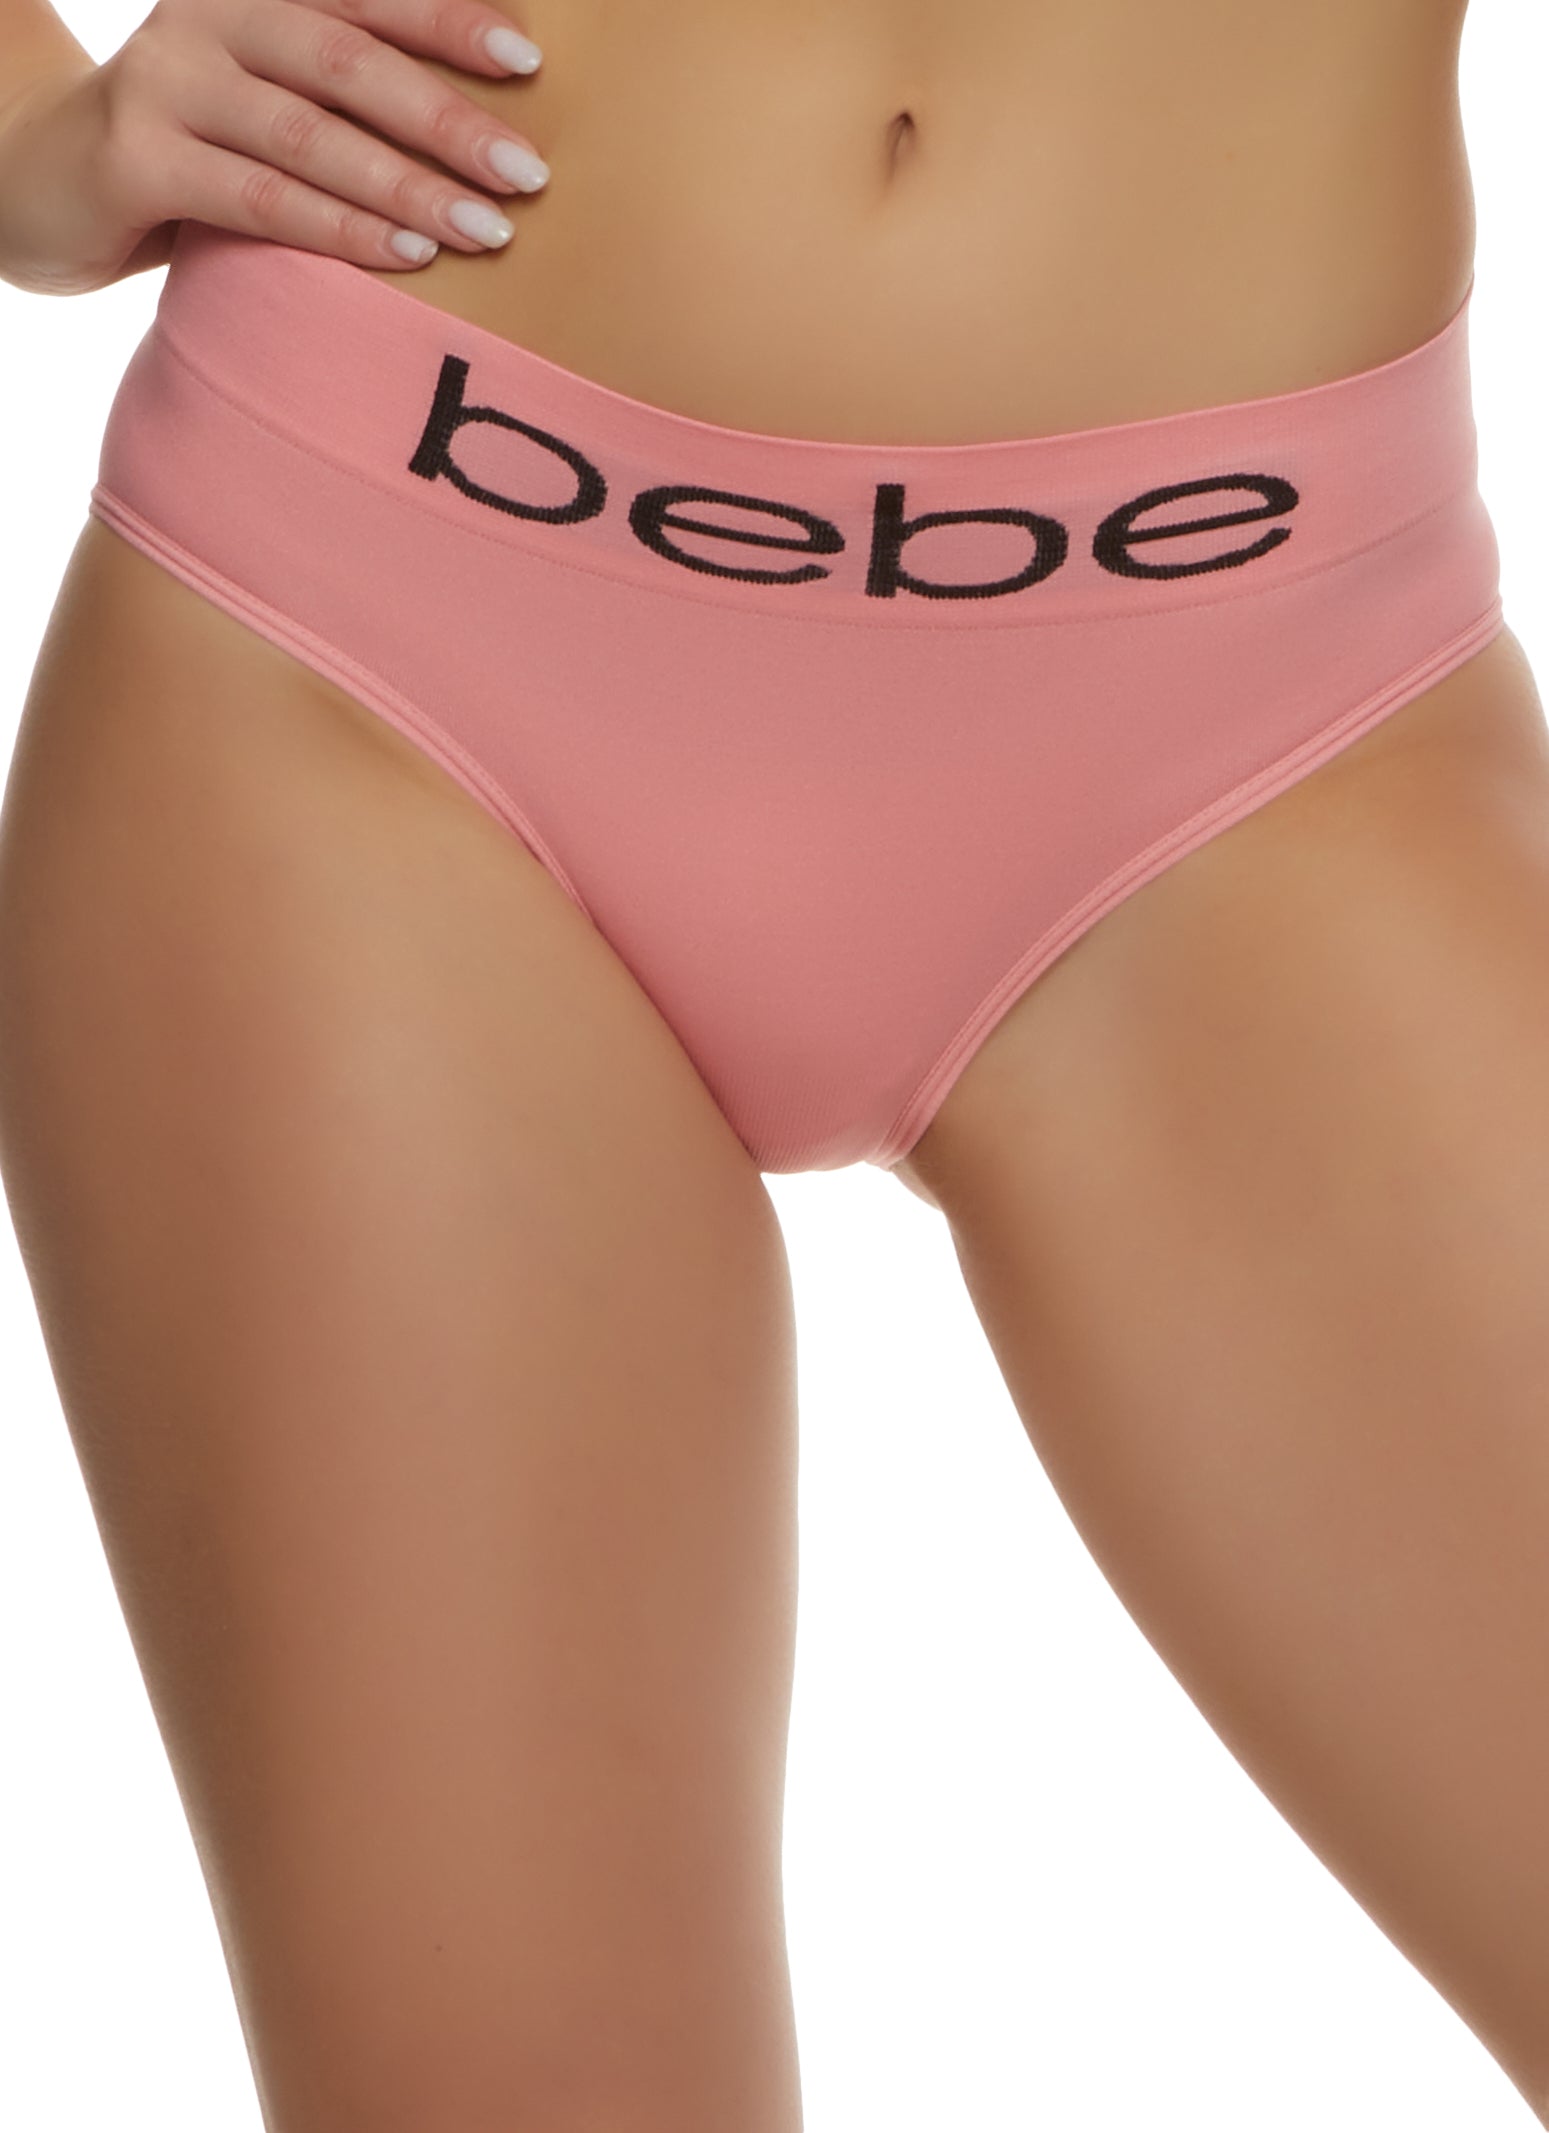 Bebe 4 Pack Seamless Graphic Boyshort Panties - Multi Color